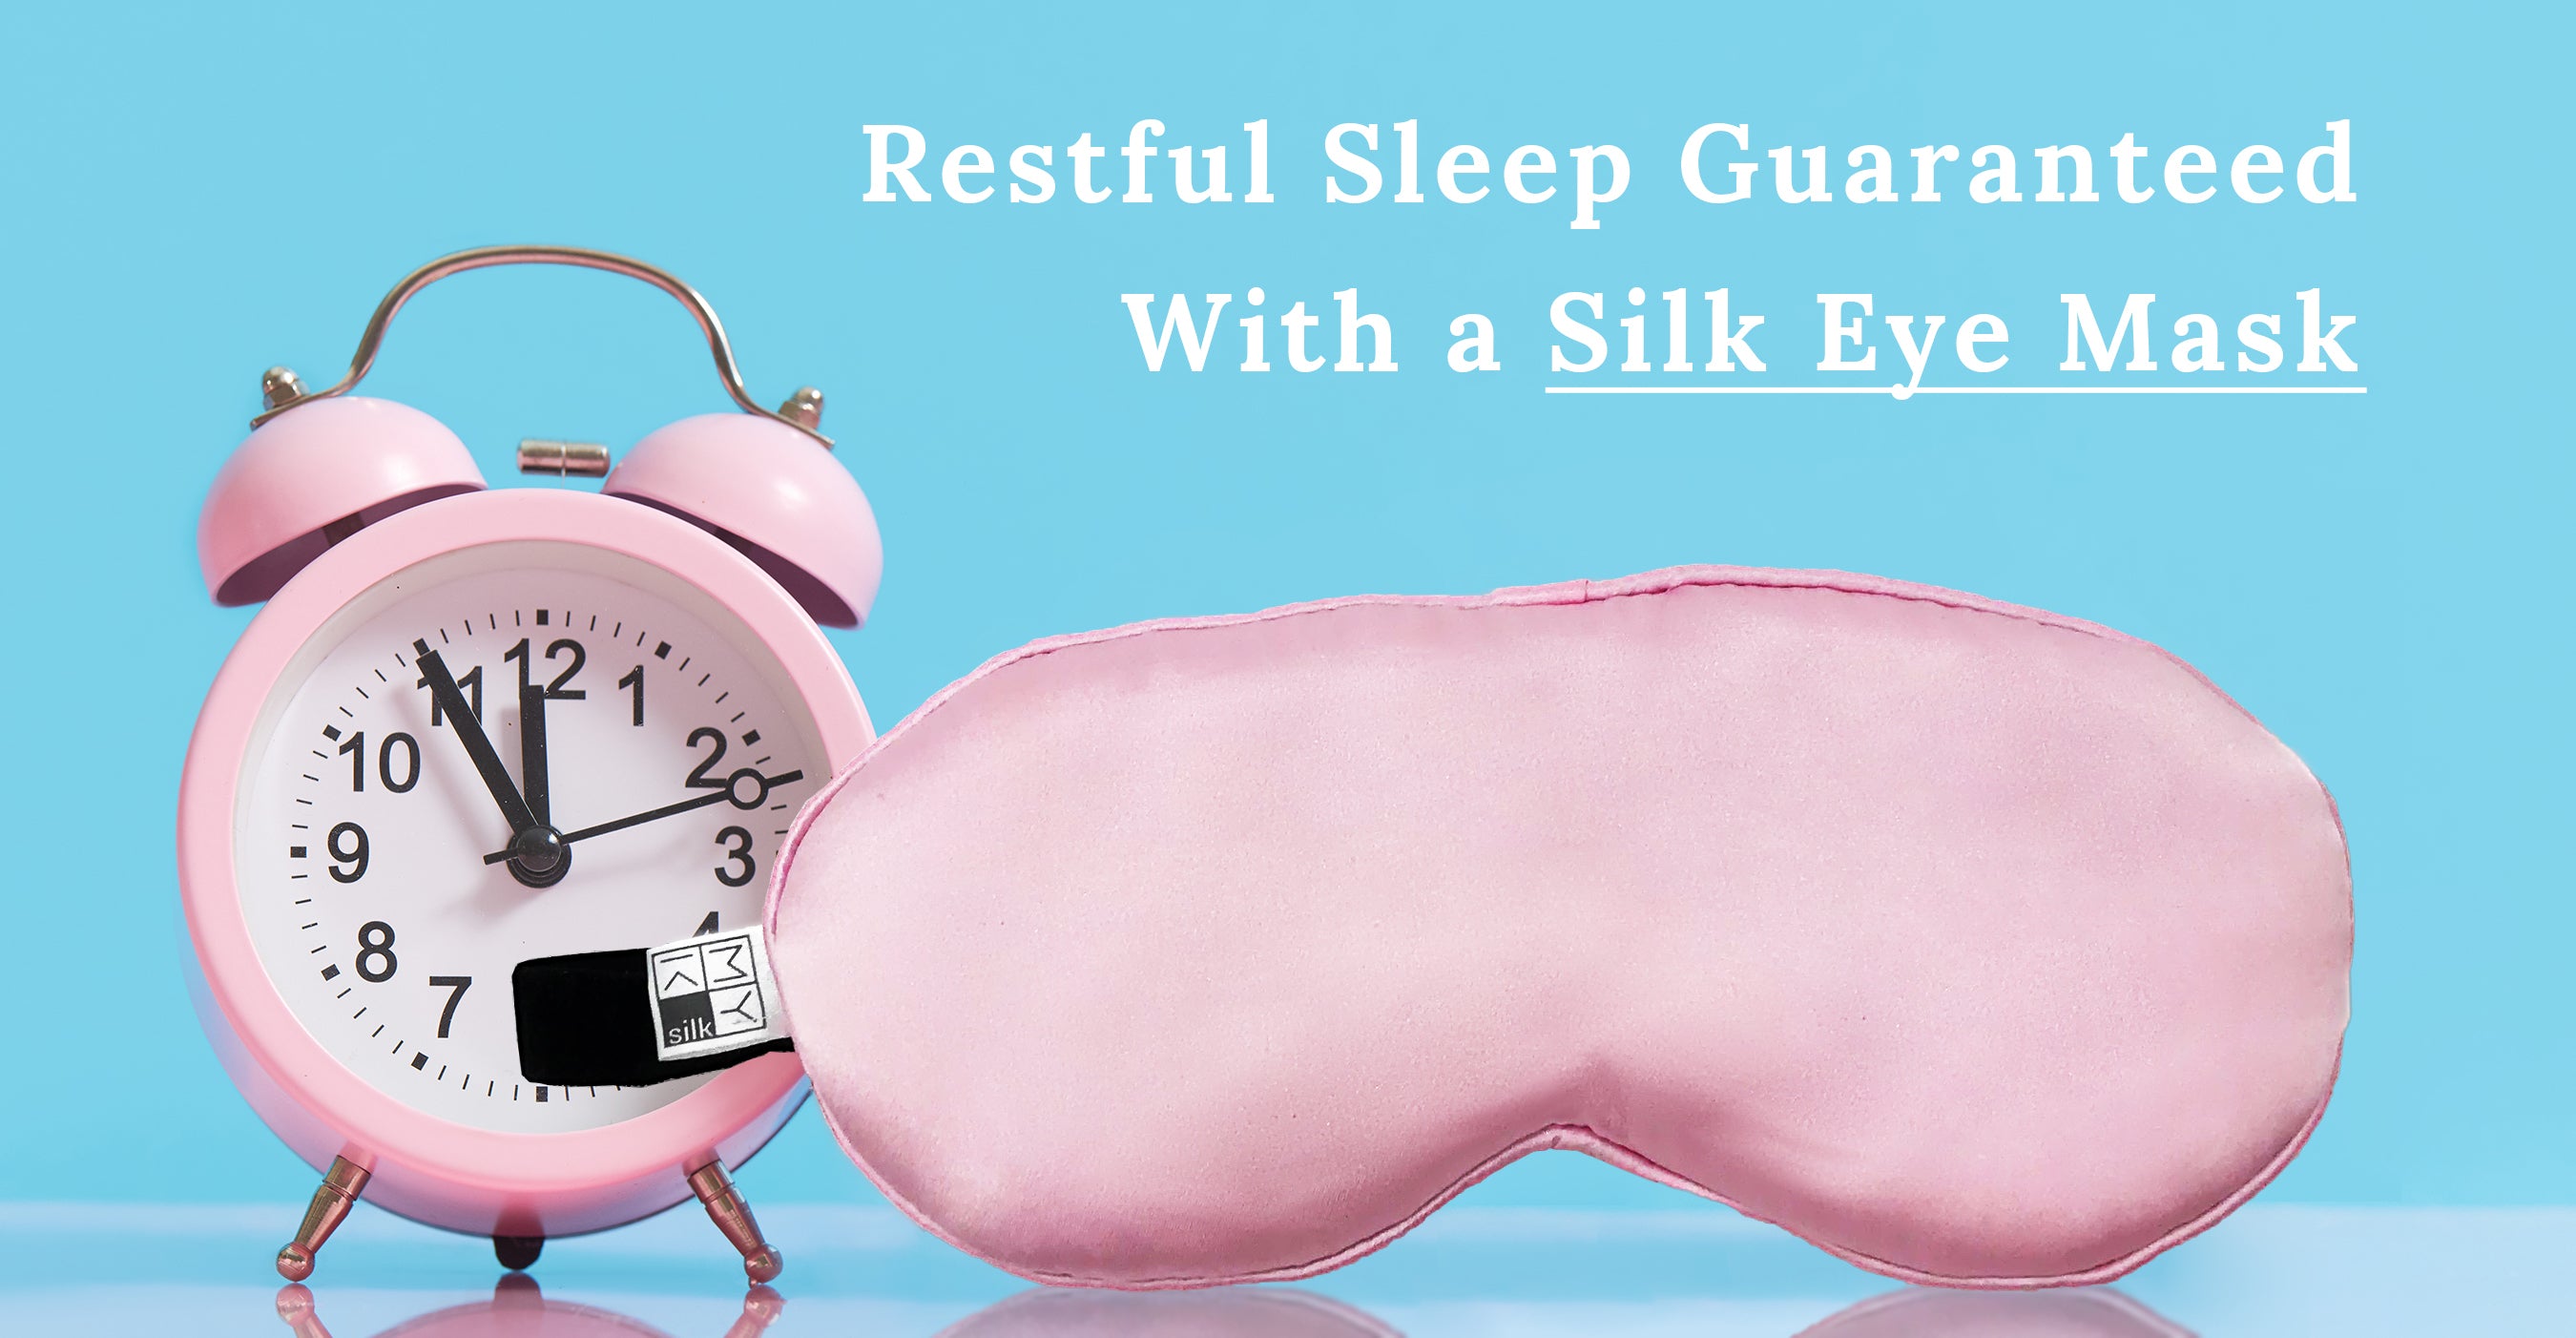 Restful Sleep Guaranteed With a Silk Eye Mask